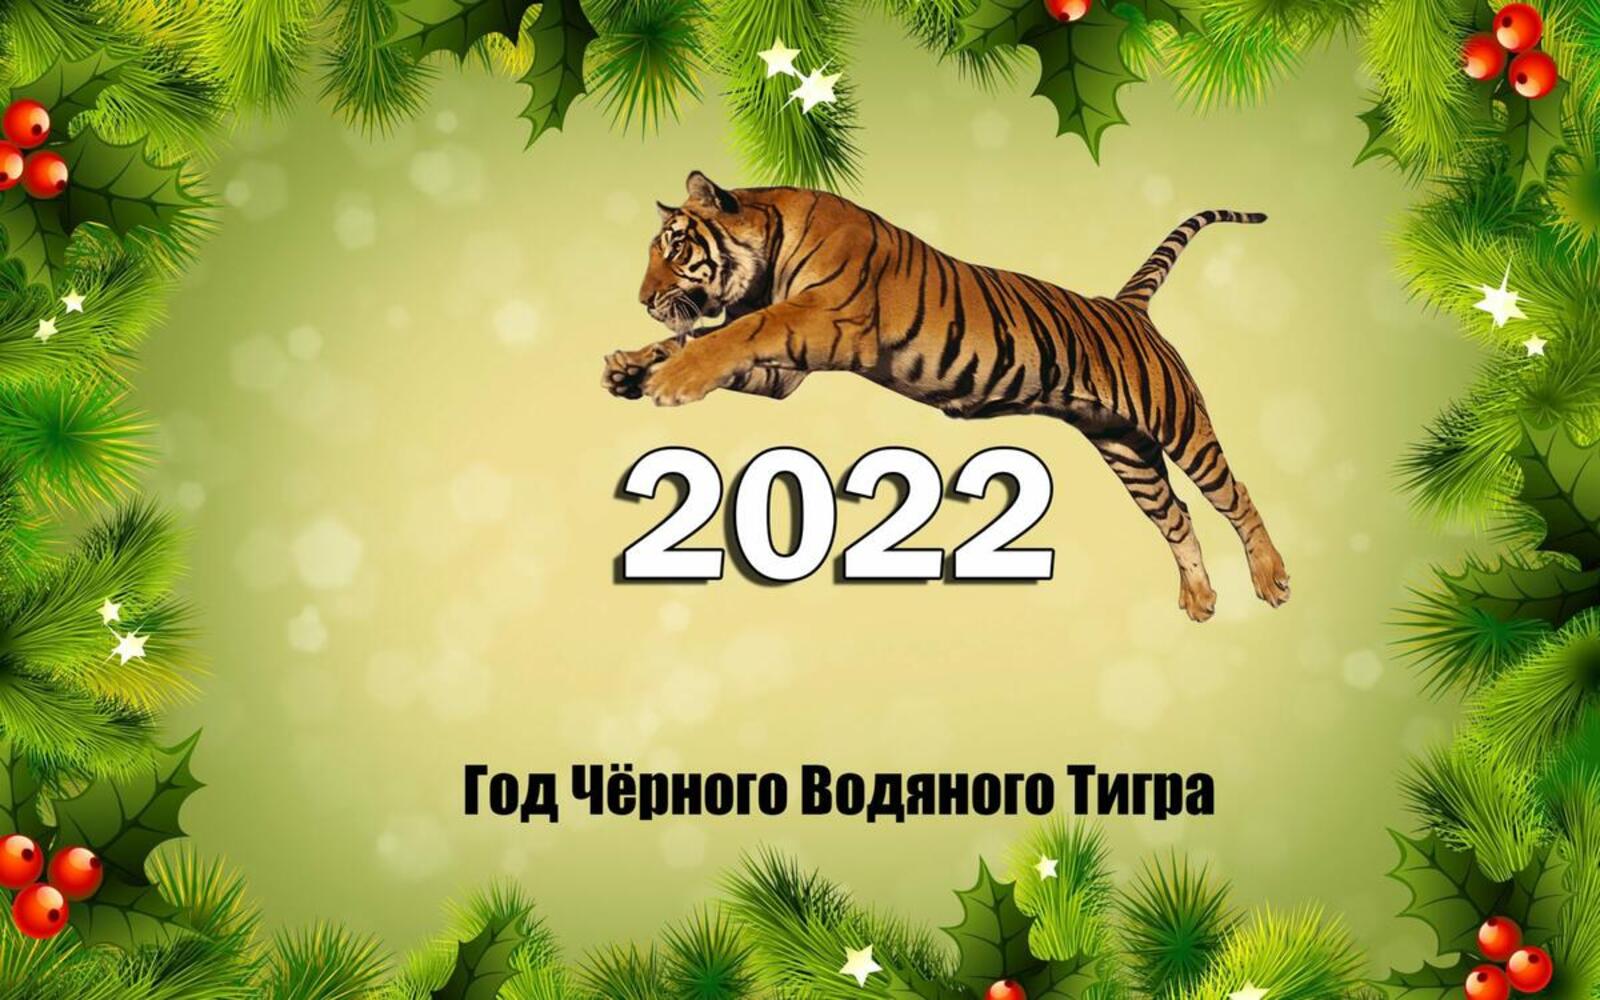 Wallpapers tiger 2022 big cat on the desktop